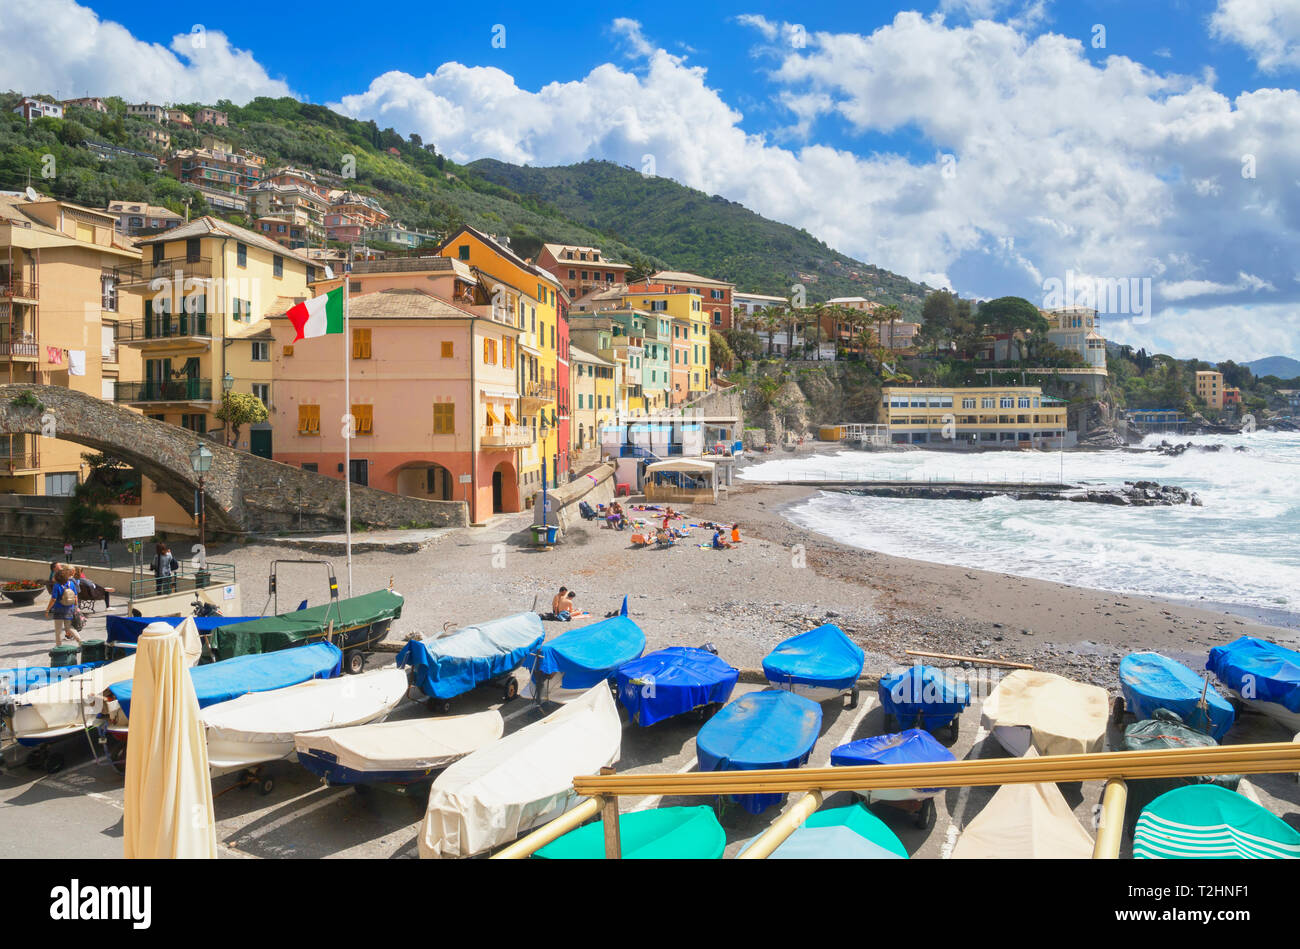 The picturesque village of Bogliasco, Bogliasco, Liguria, Italy, Europe Stock Photo